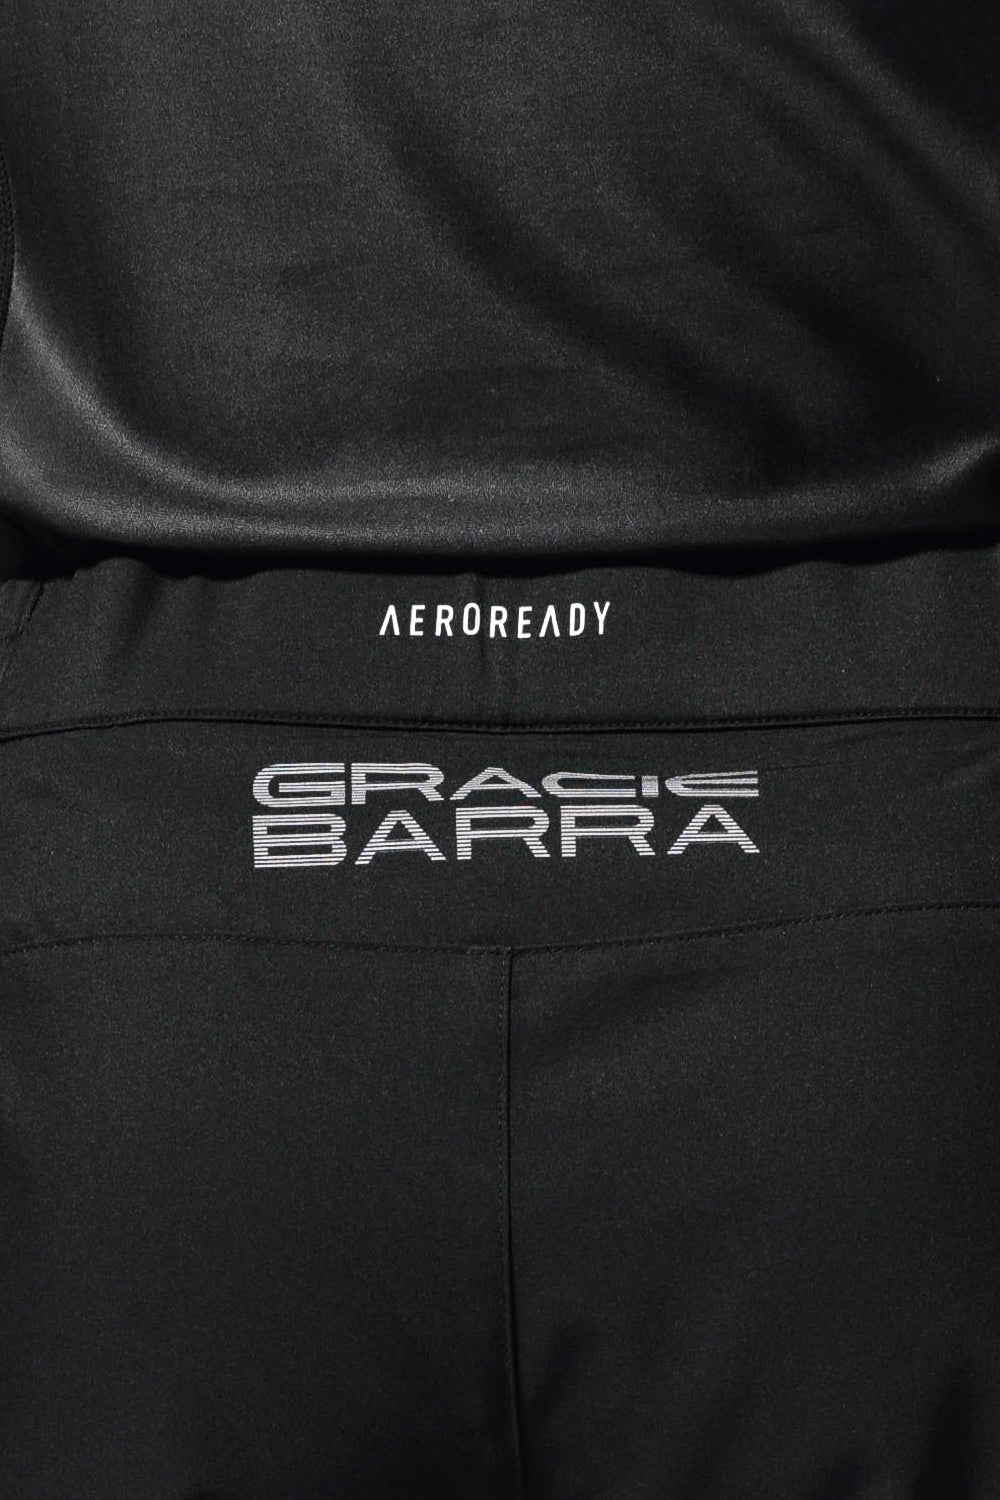 Barra Performance Short V4 by Adidas - Black